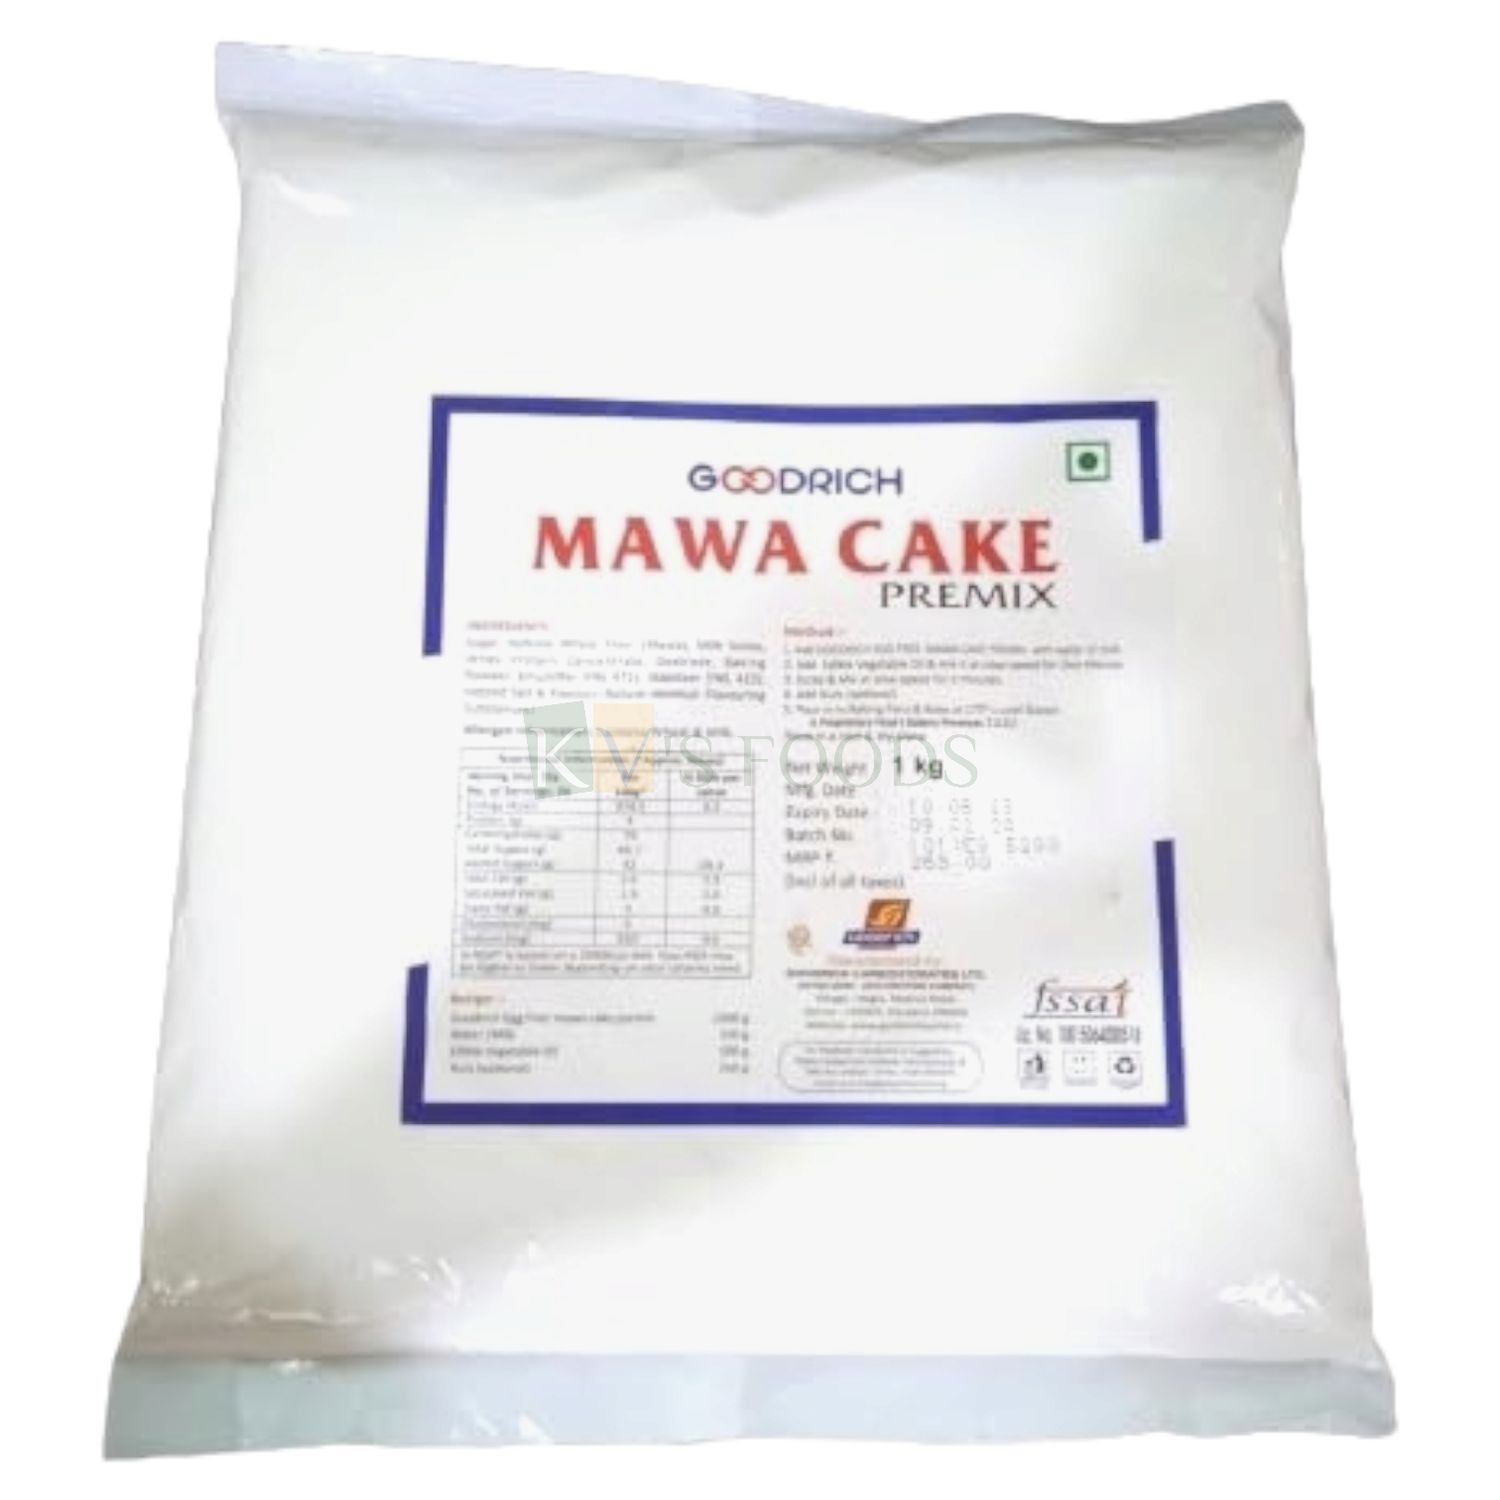 1 KG Goodrich Mawa Cake Premix, Cake Mixture for Cake Baking - Just Add Water/Milk and Oil, Used for making Birthday, Wedding, Anniversary, Engagement Cake, Cupcake, Desserts, Tea, Plum Cakes